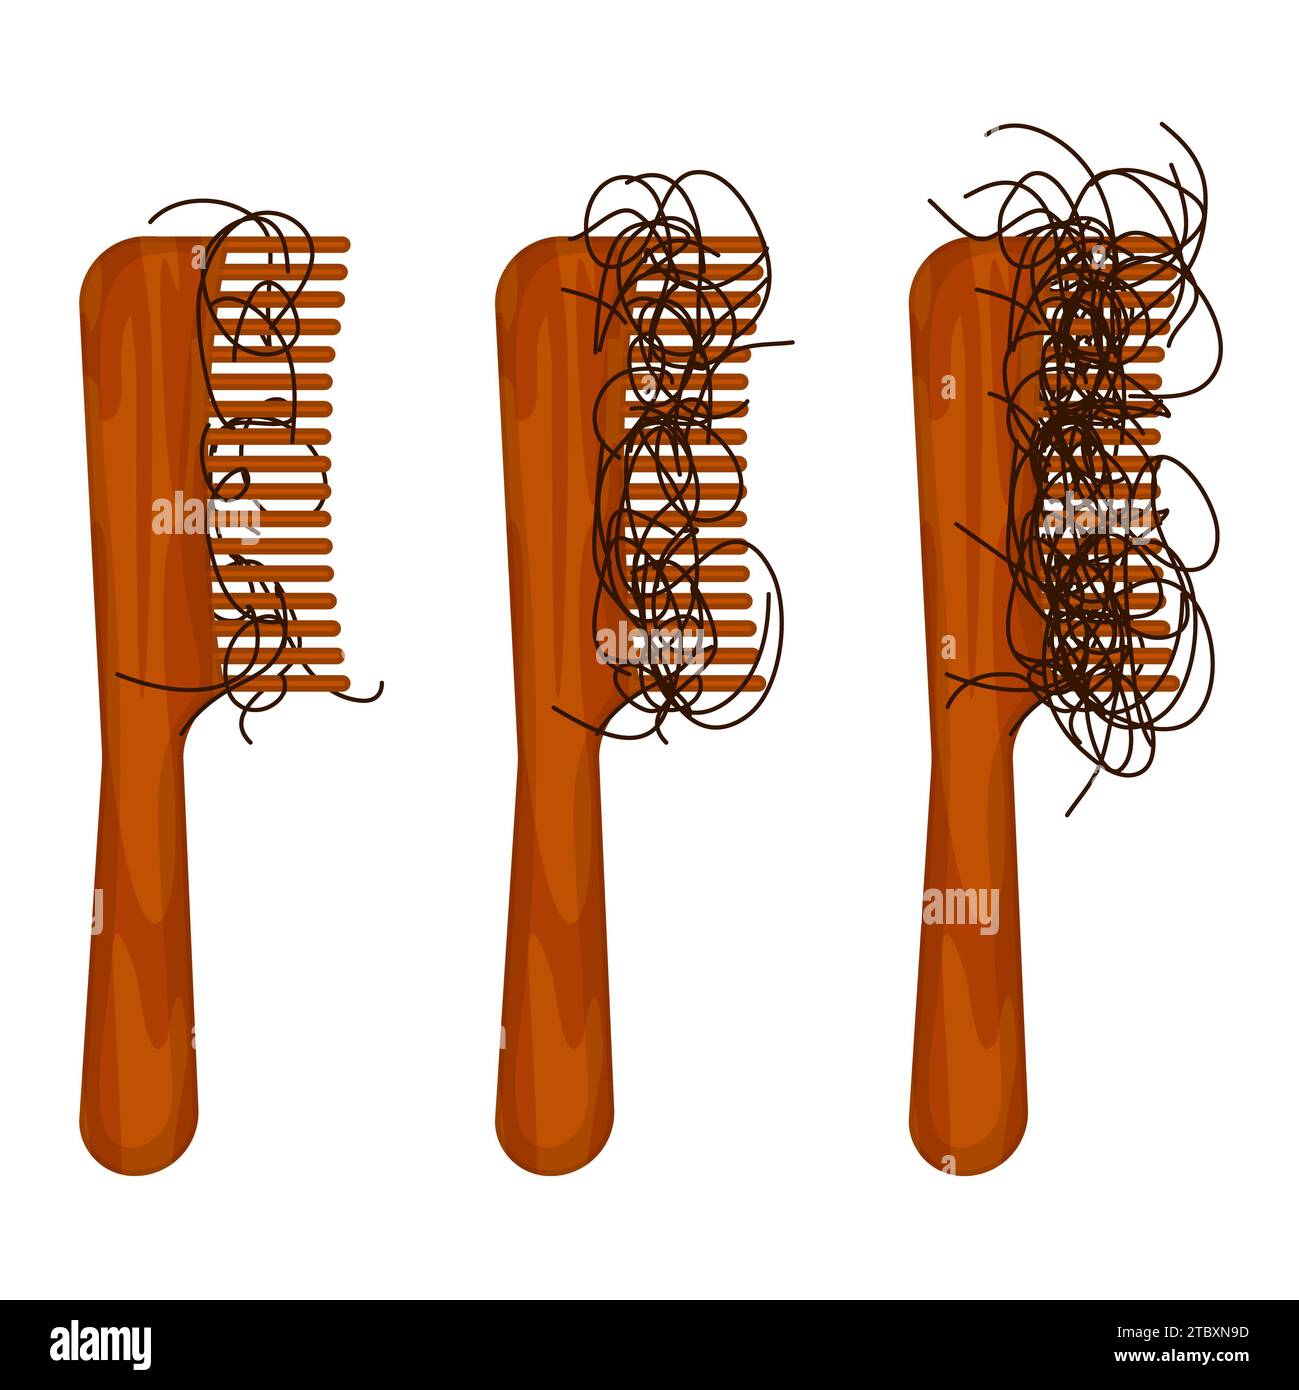 Hair loss, conceptual illustration Stock Photo